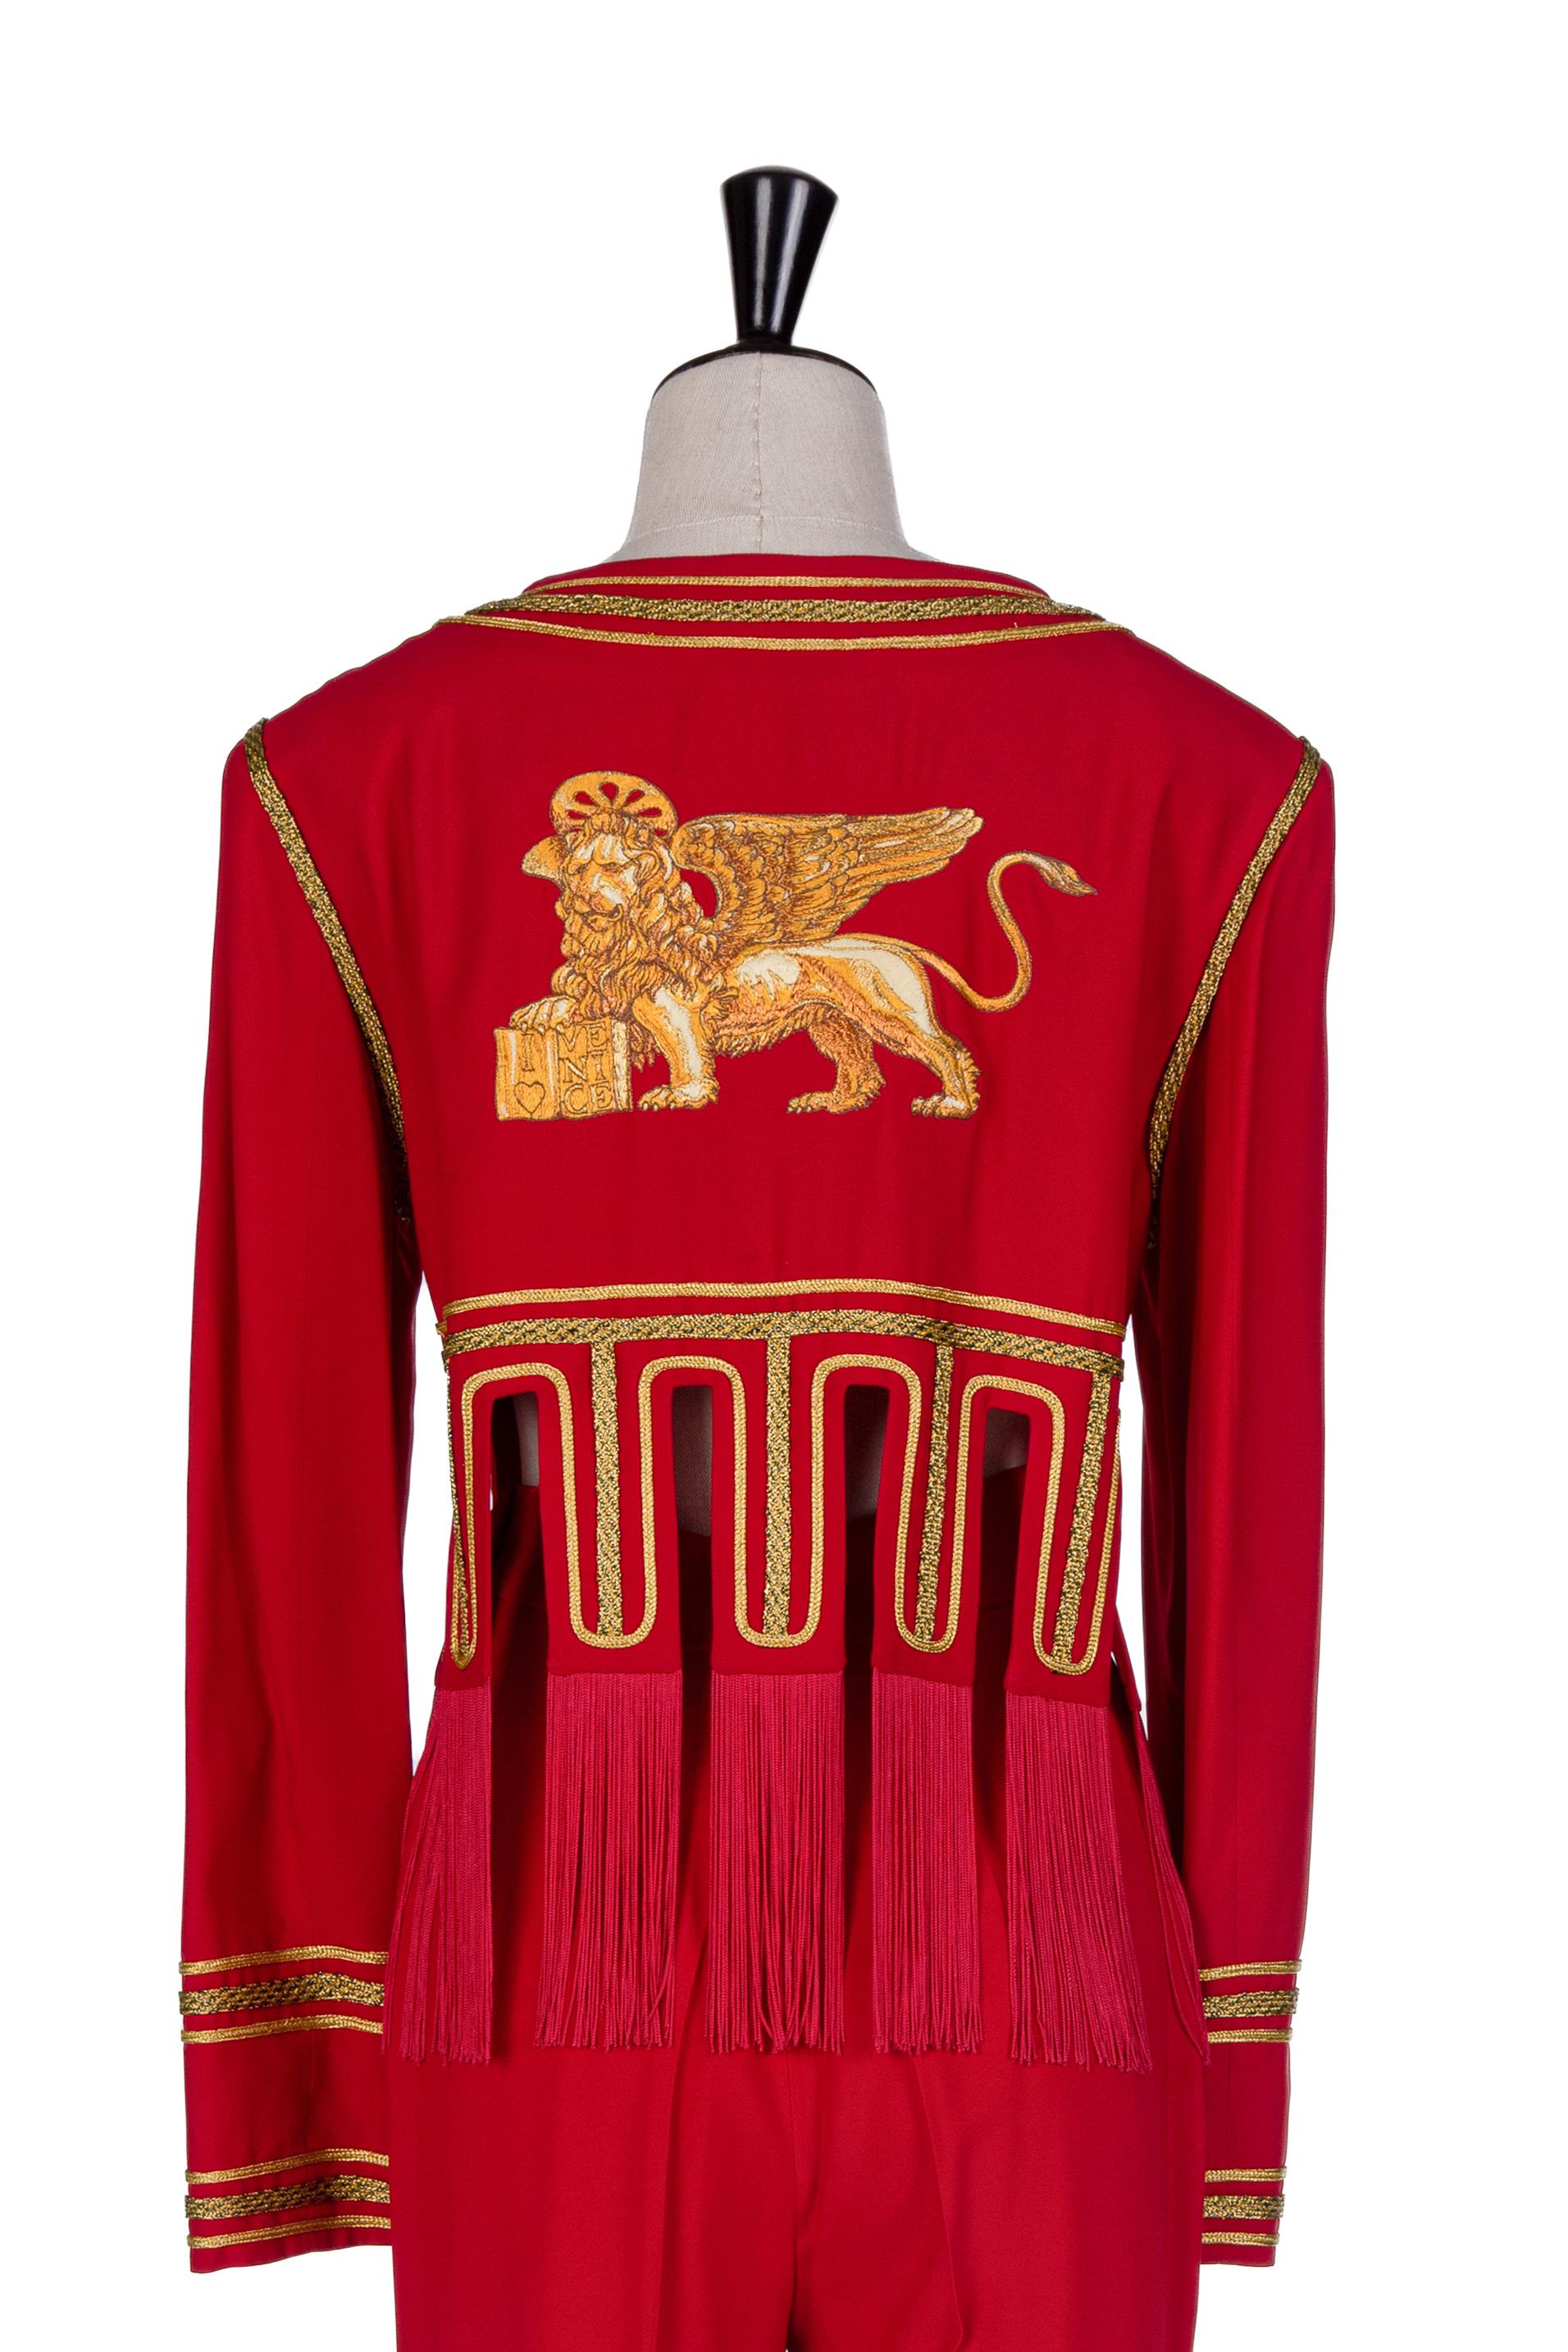 1989 MOSCHINO COUTURE Red I Love Venice Lion Appliquéd Jacket & Pant Suit For Sale 3